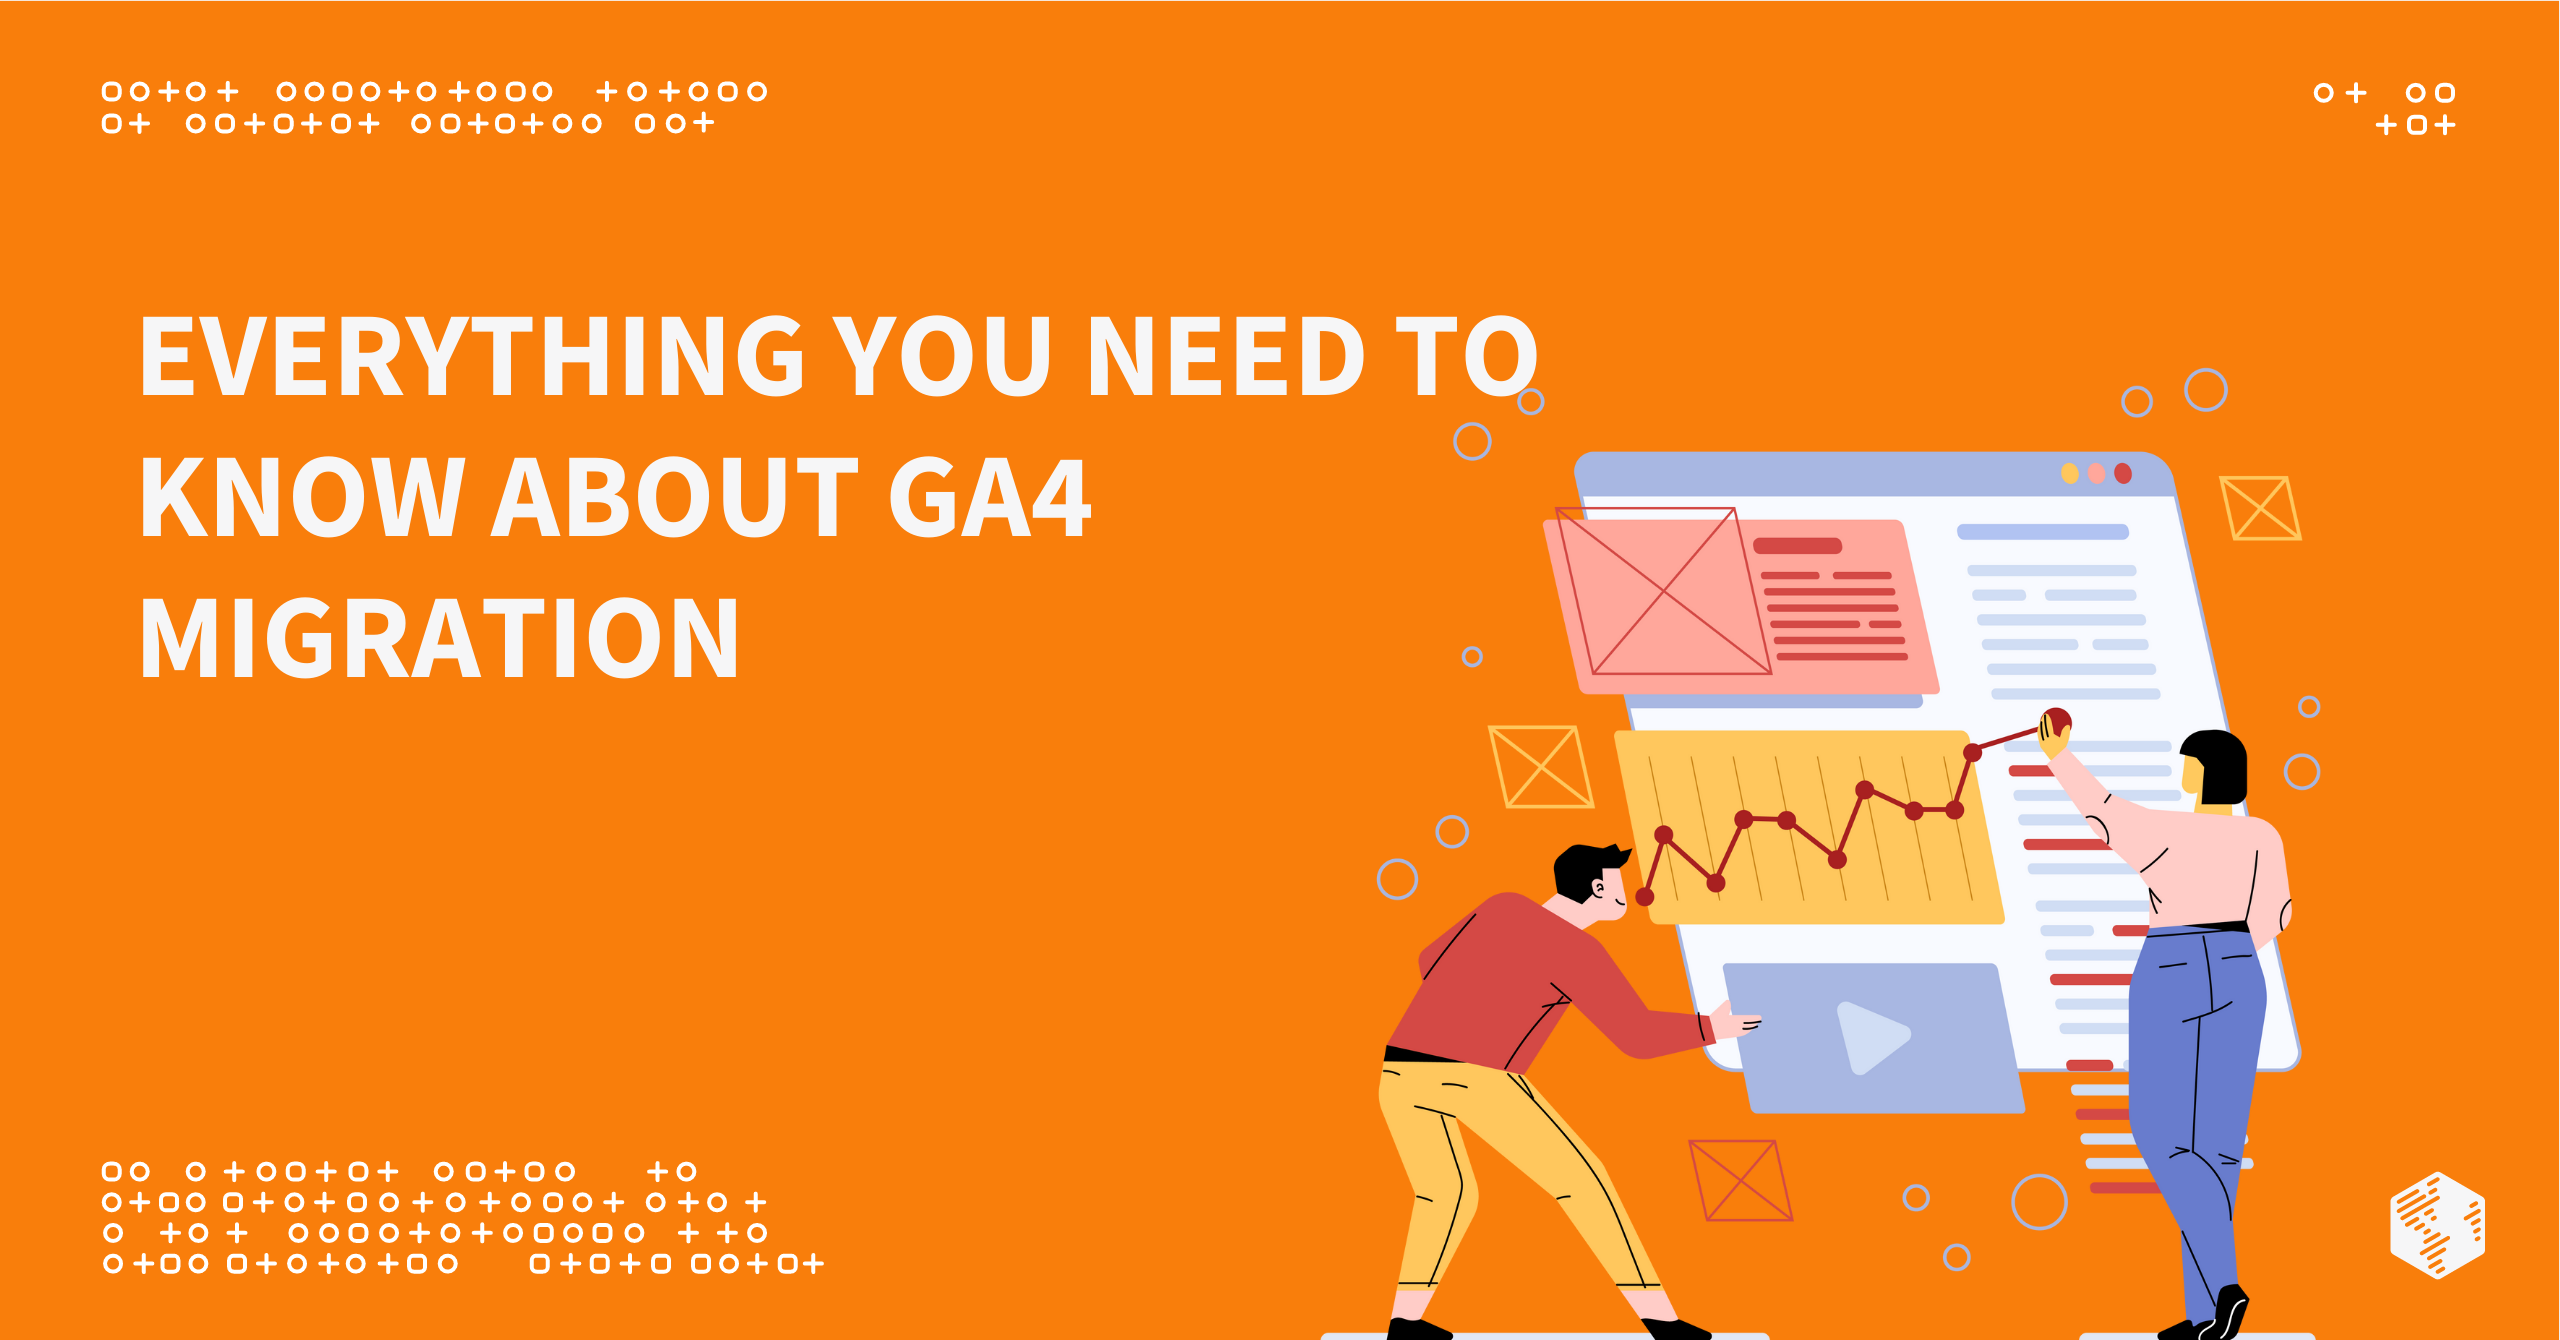 GA4 Migration Guide